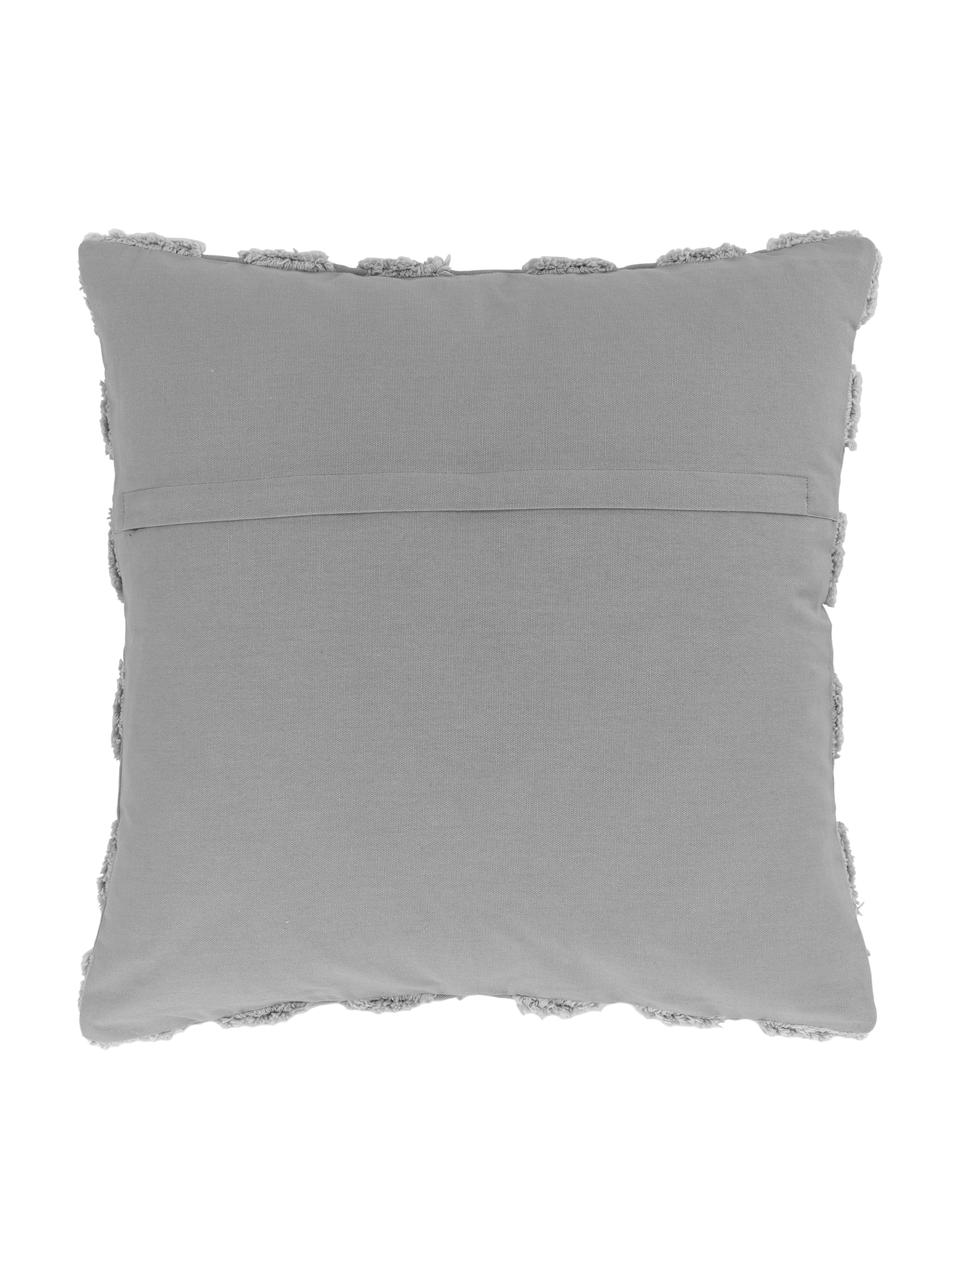 Kissenhülle Kara mit getuftetem Muster, 100% Baumwolle, Grau, 50 x 50 cm